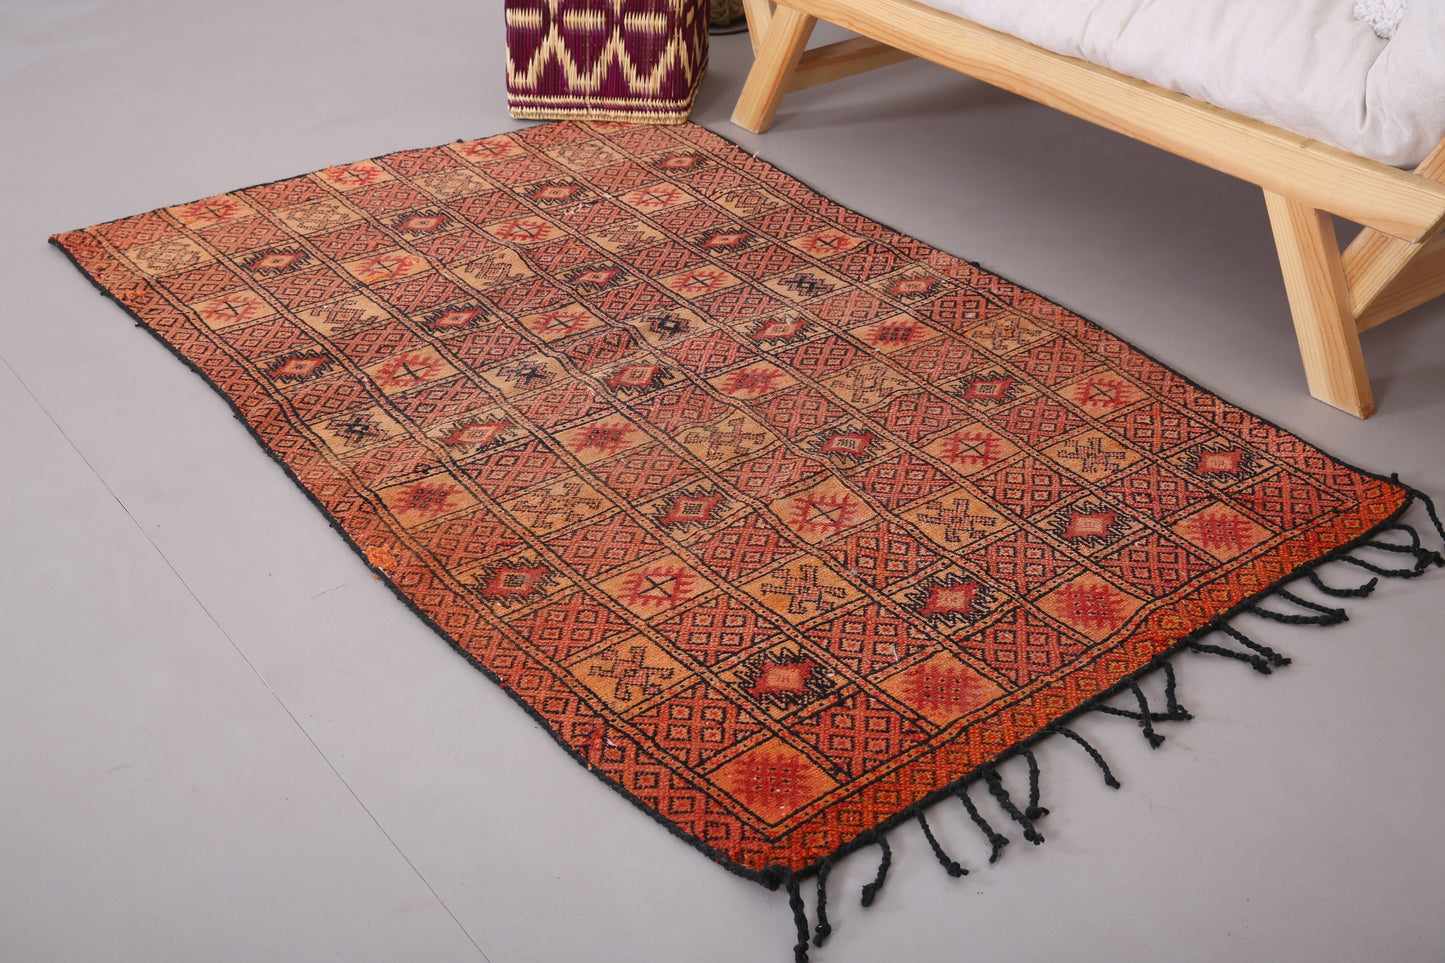 Marokkanischer flach gewebter Berberteppich 3,4 FT x 5,6 FT - kleiner Berberteppich - kleiner marokkanischer Teppich - handgefertigter Berberteppich - Vintage marokkanischer Boho-Teppich